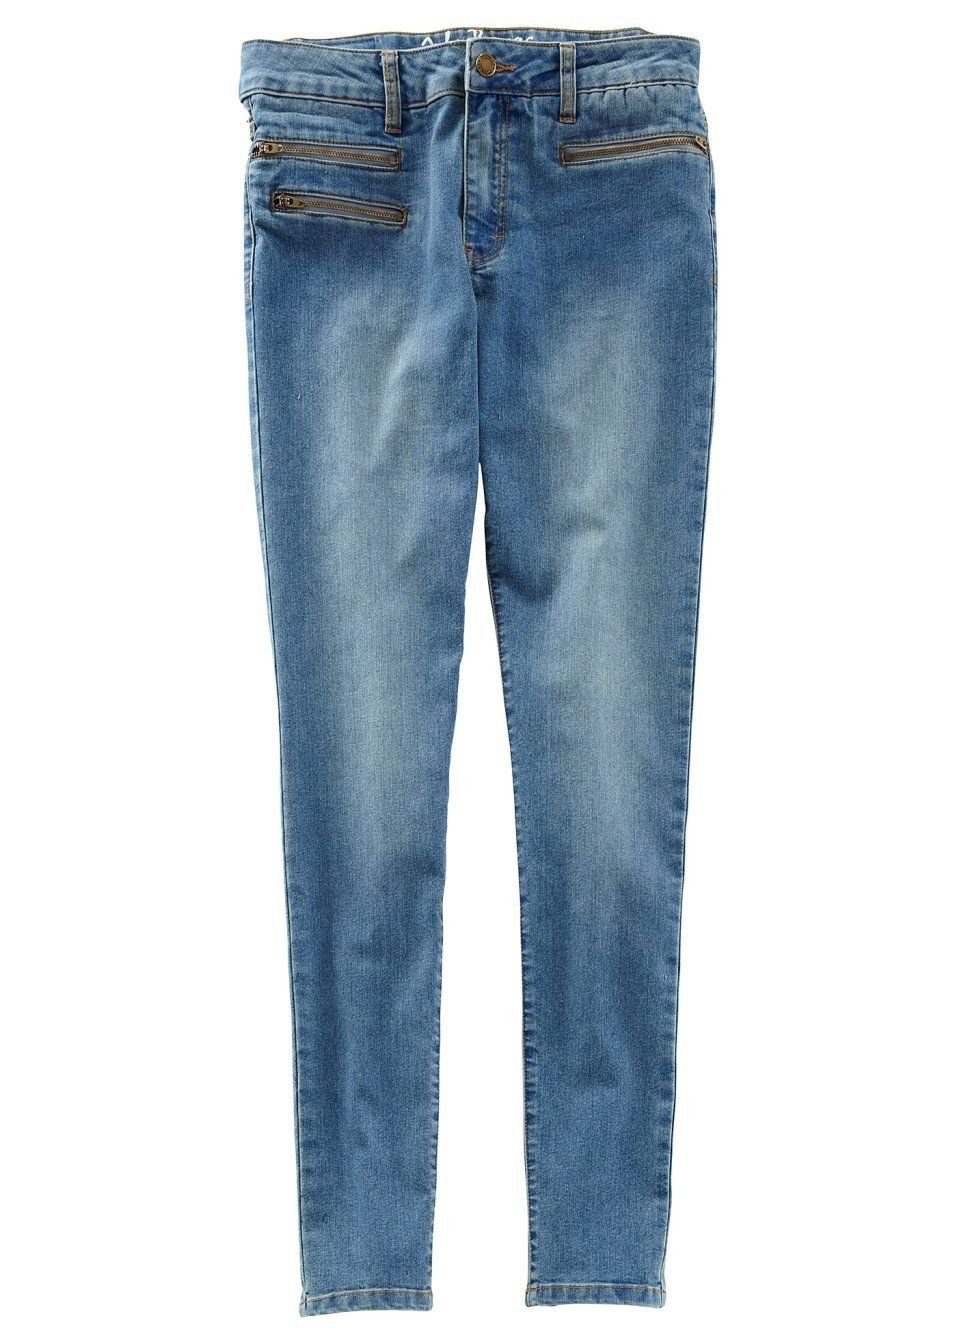 YESET Stretch-Jeans Damen Stretch-Jeans Hose Chino Röhre Zipper medium blue Gr 36 906595